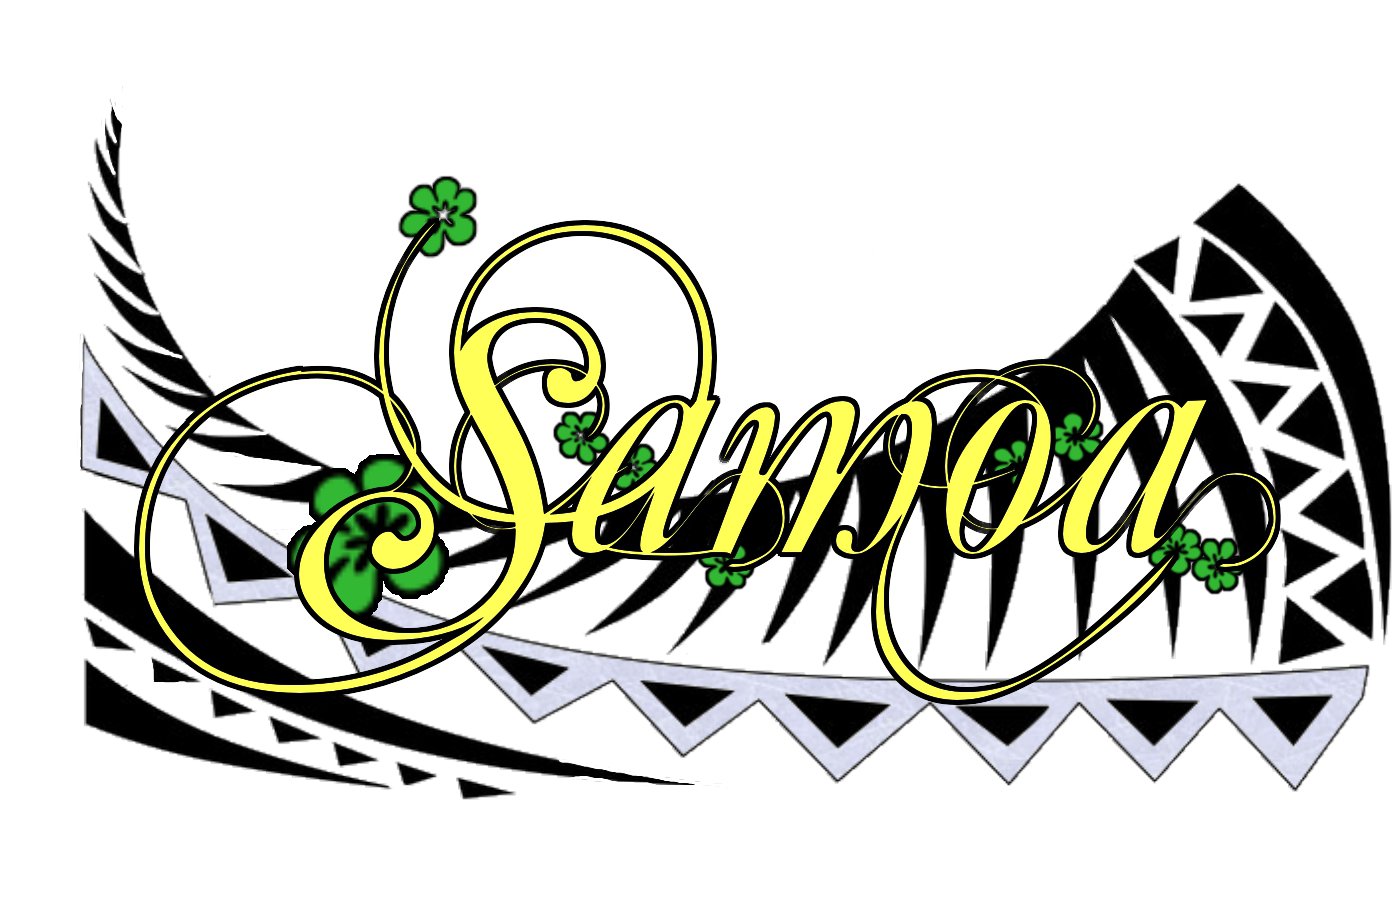 Samoan Drawings Samoan pisto684 | Design images